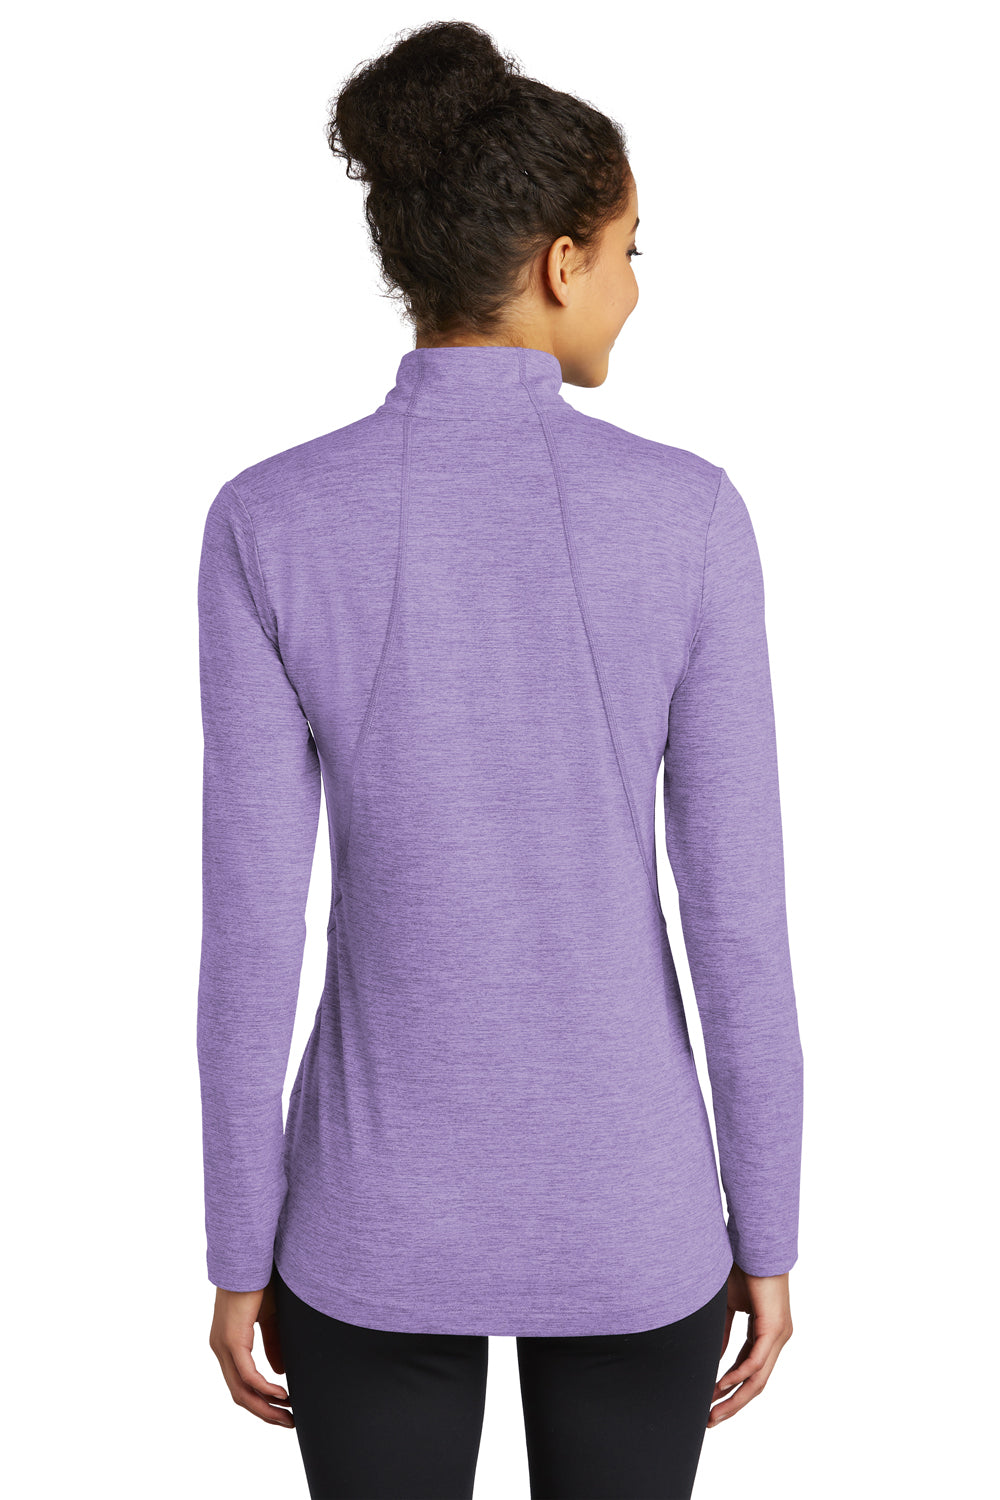 Sport-Tek Womens Exchange 1.5 Long Sleeve 1/4 Zip T-Shirt Heather Hyacinth Purple Side